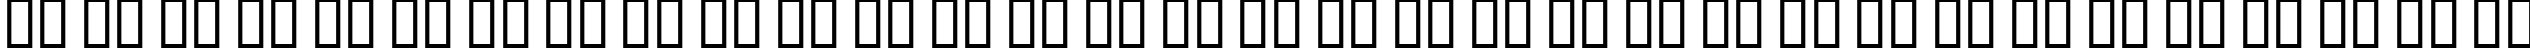 Пример написания русского алфавита шрифтом Palace Script MT Semi Bold